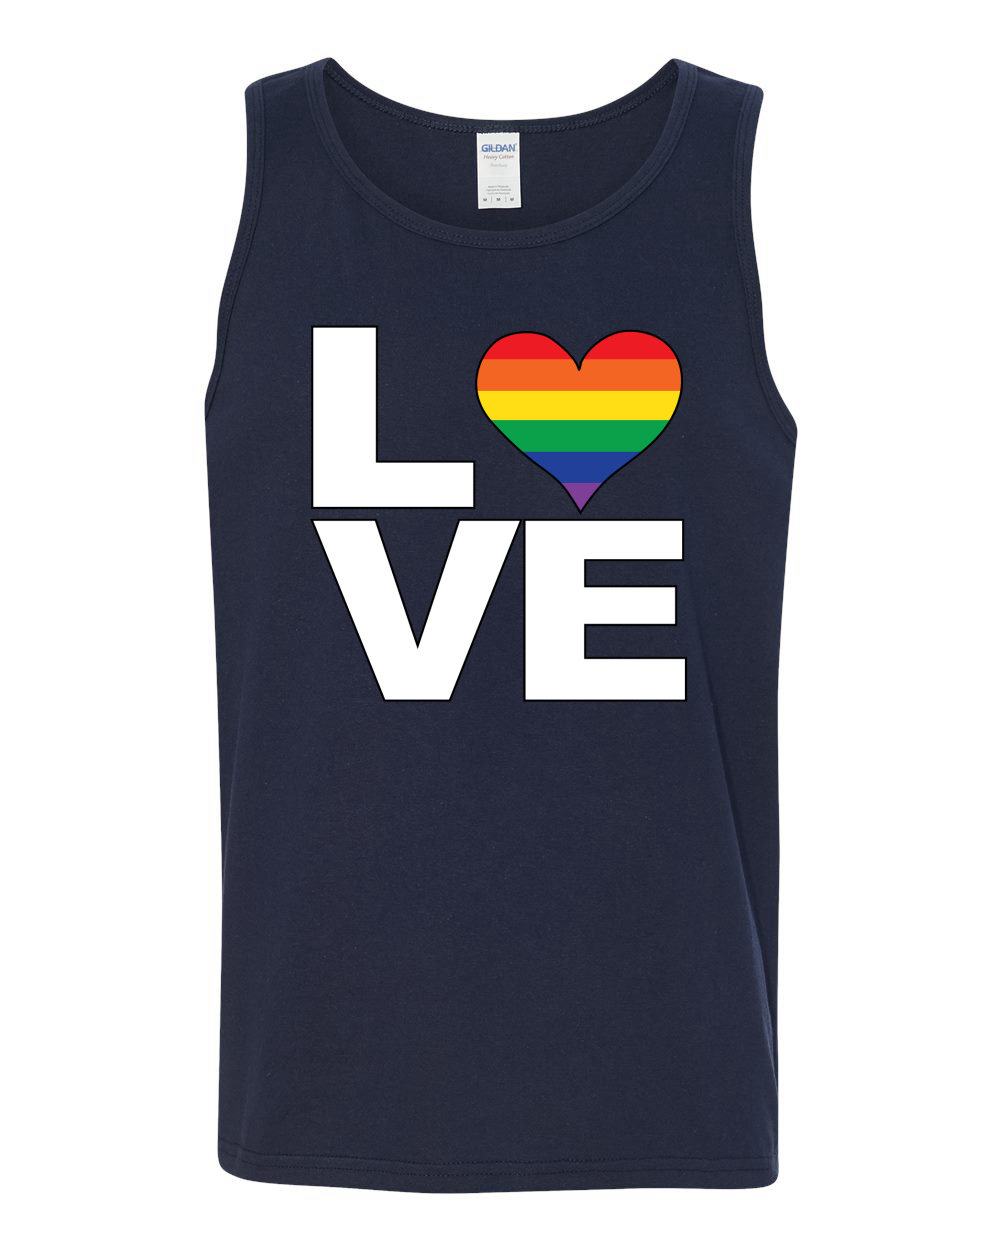 Love Heart Mens Lgbt Pride Tank Top Gay Muscle Shirt Ebay